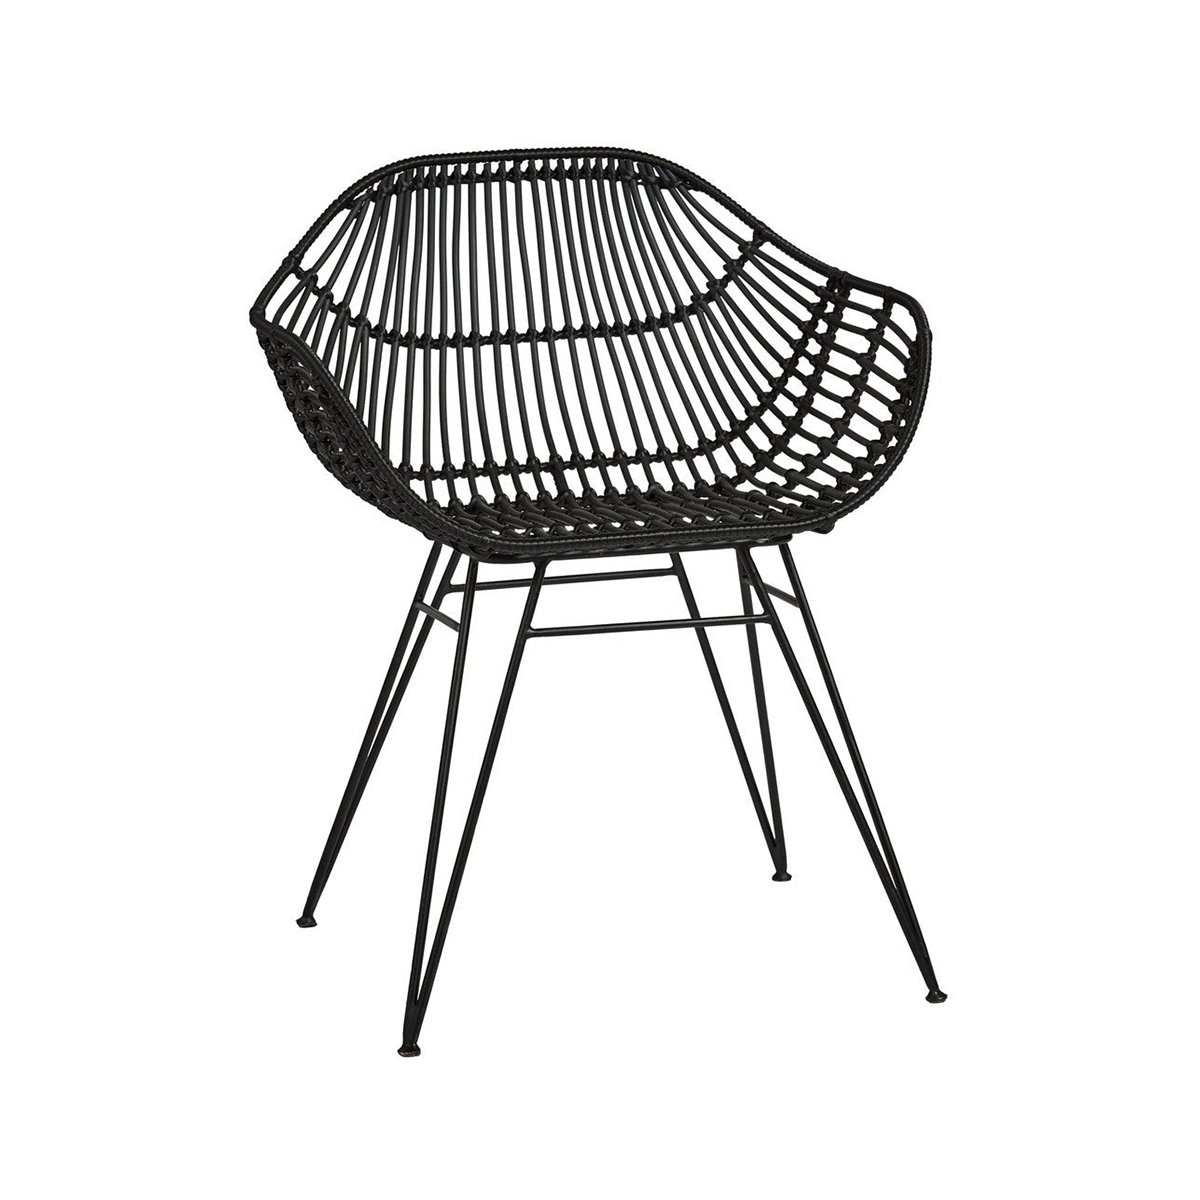 FondHouse Lompoc Garden Chair Black